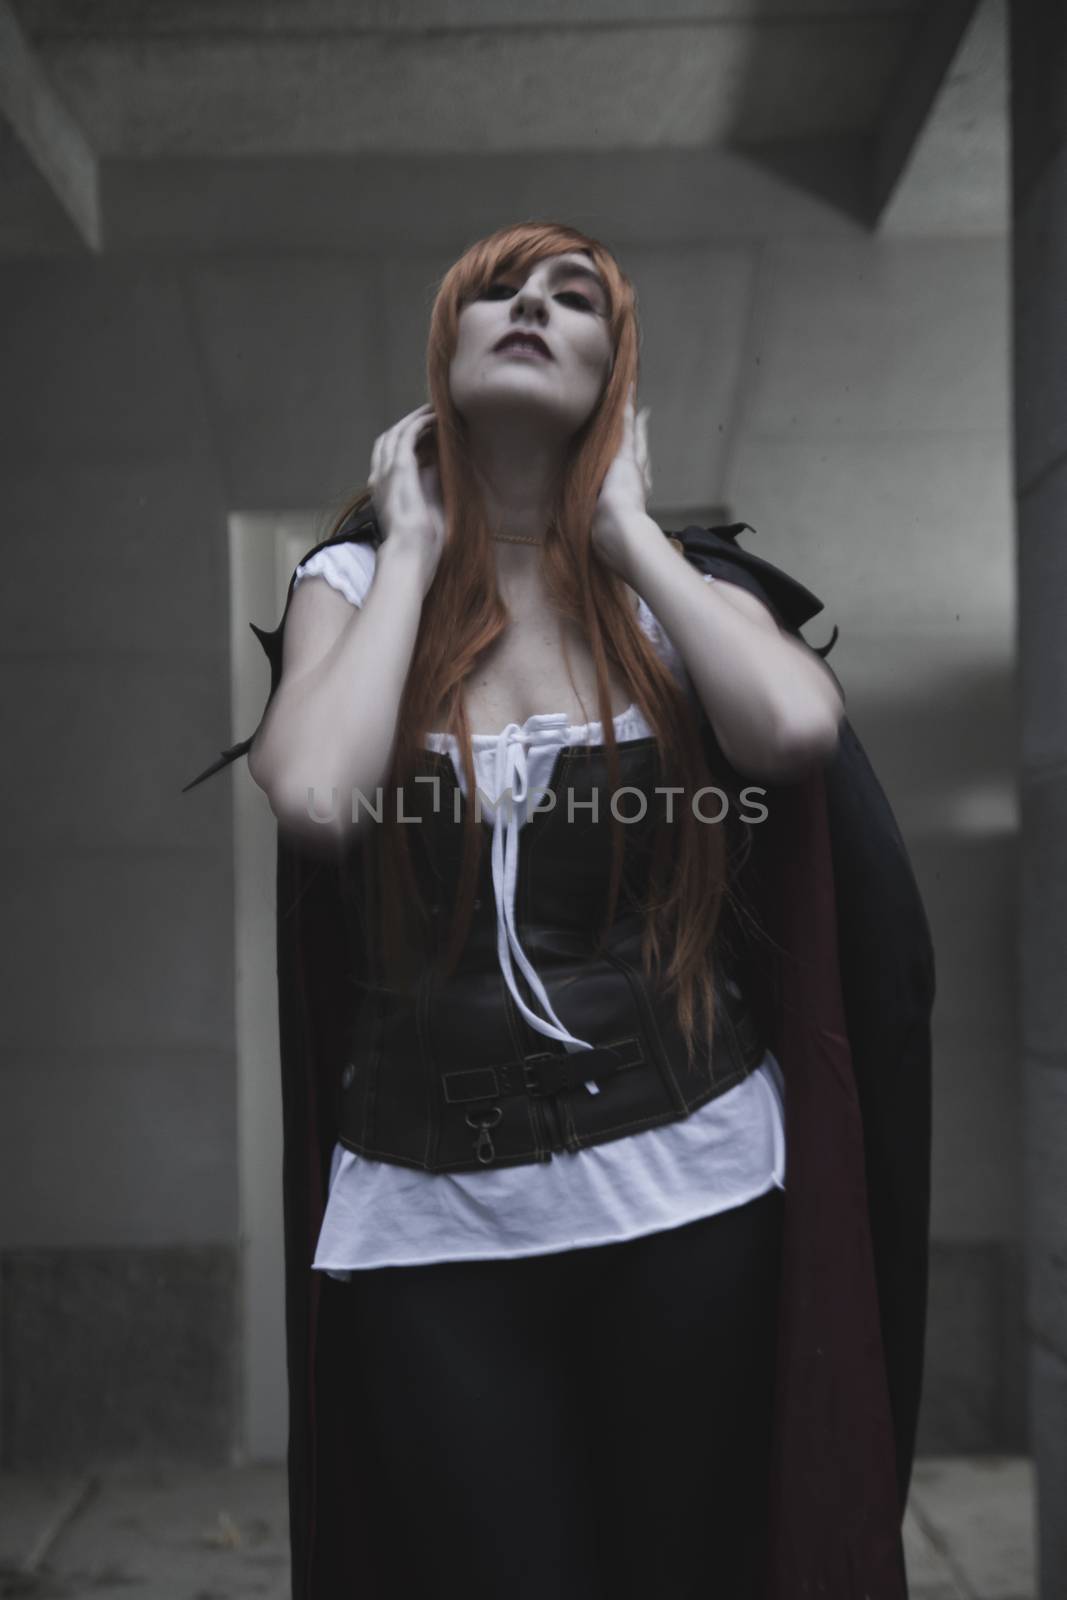 Dark beauty under rain, red hair woman with long black coat by FernandoCortes